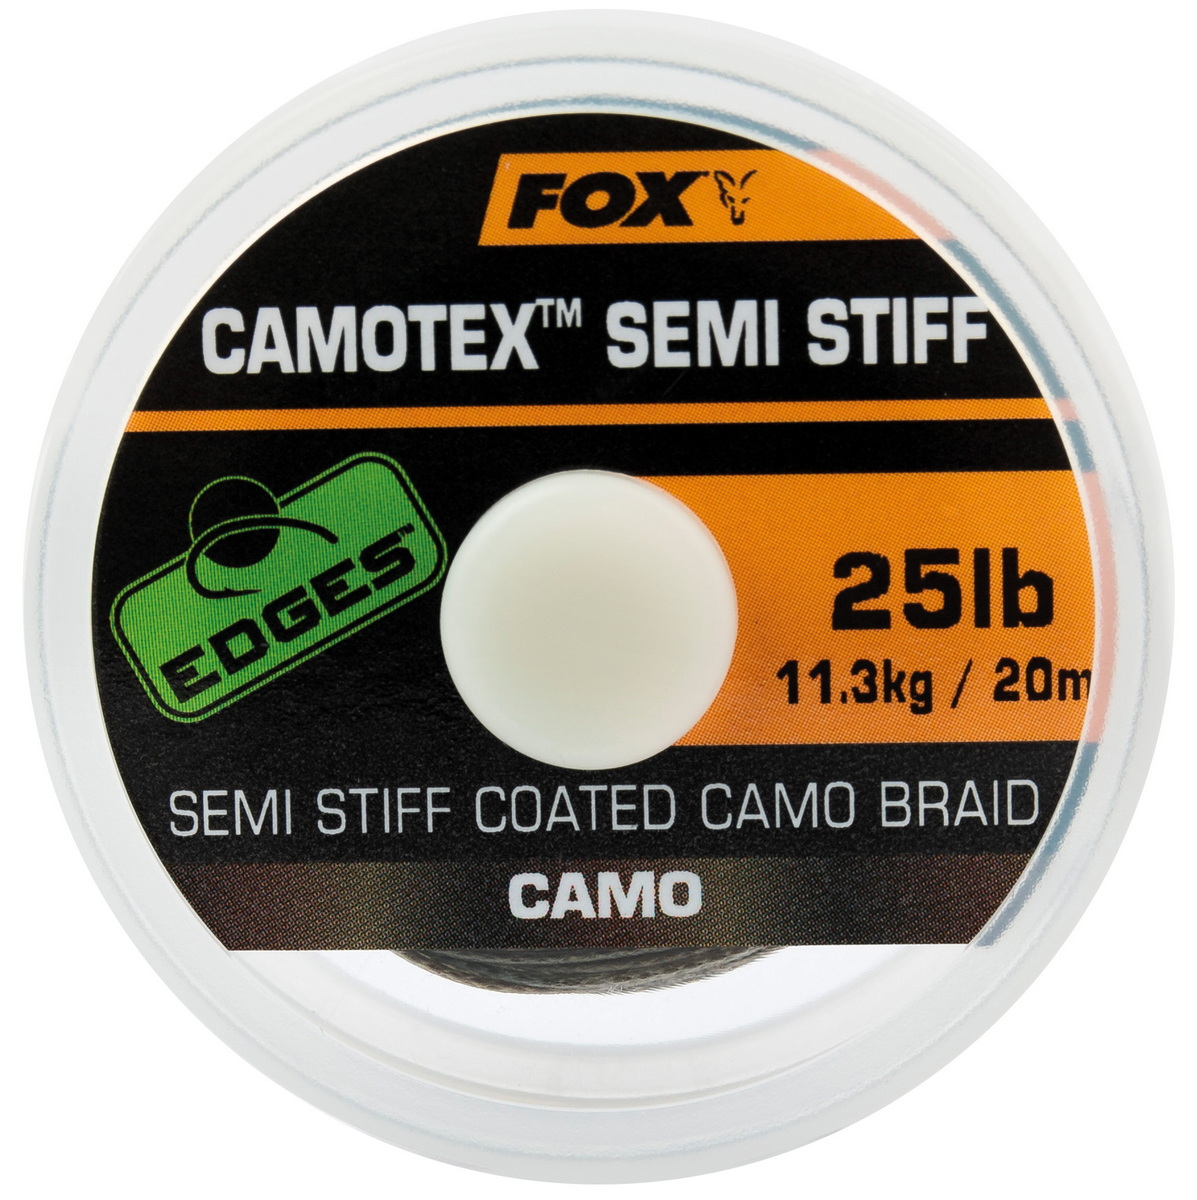 FOX Camotex Semi Stiff - 25lb